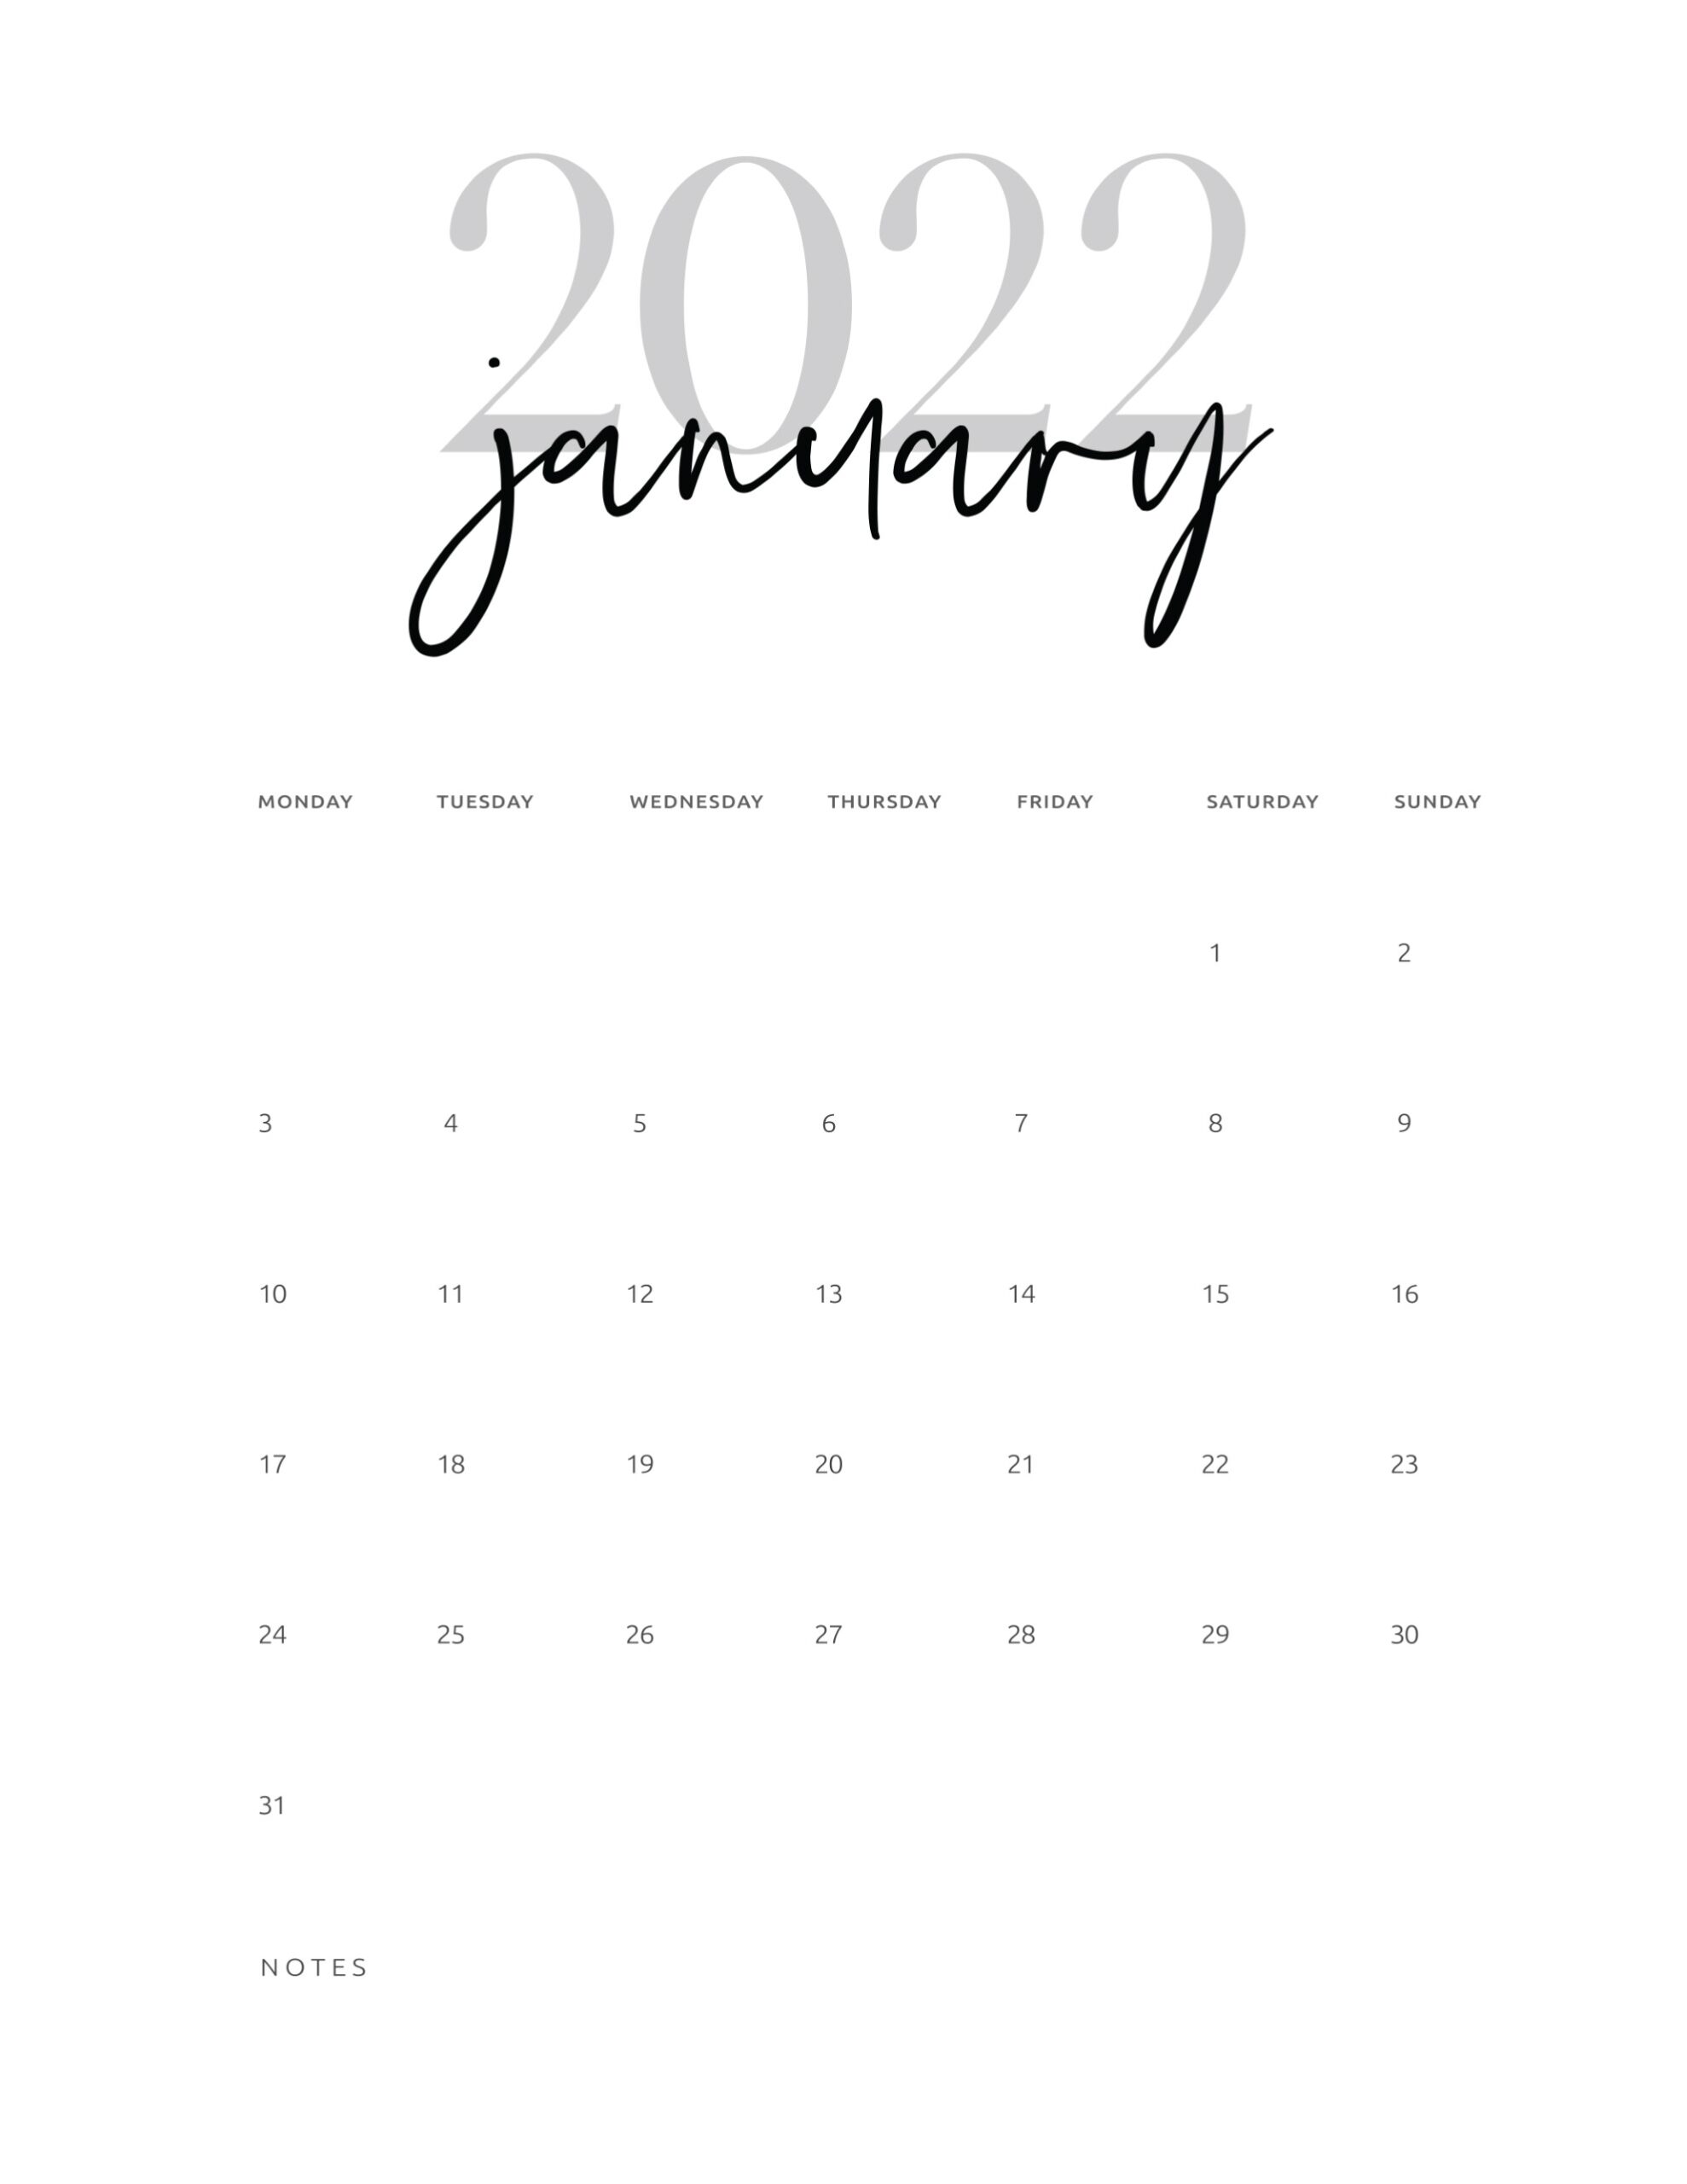 Calendar 2022 January